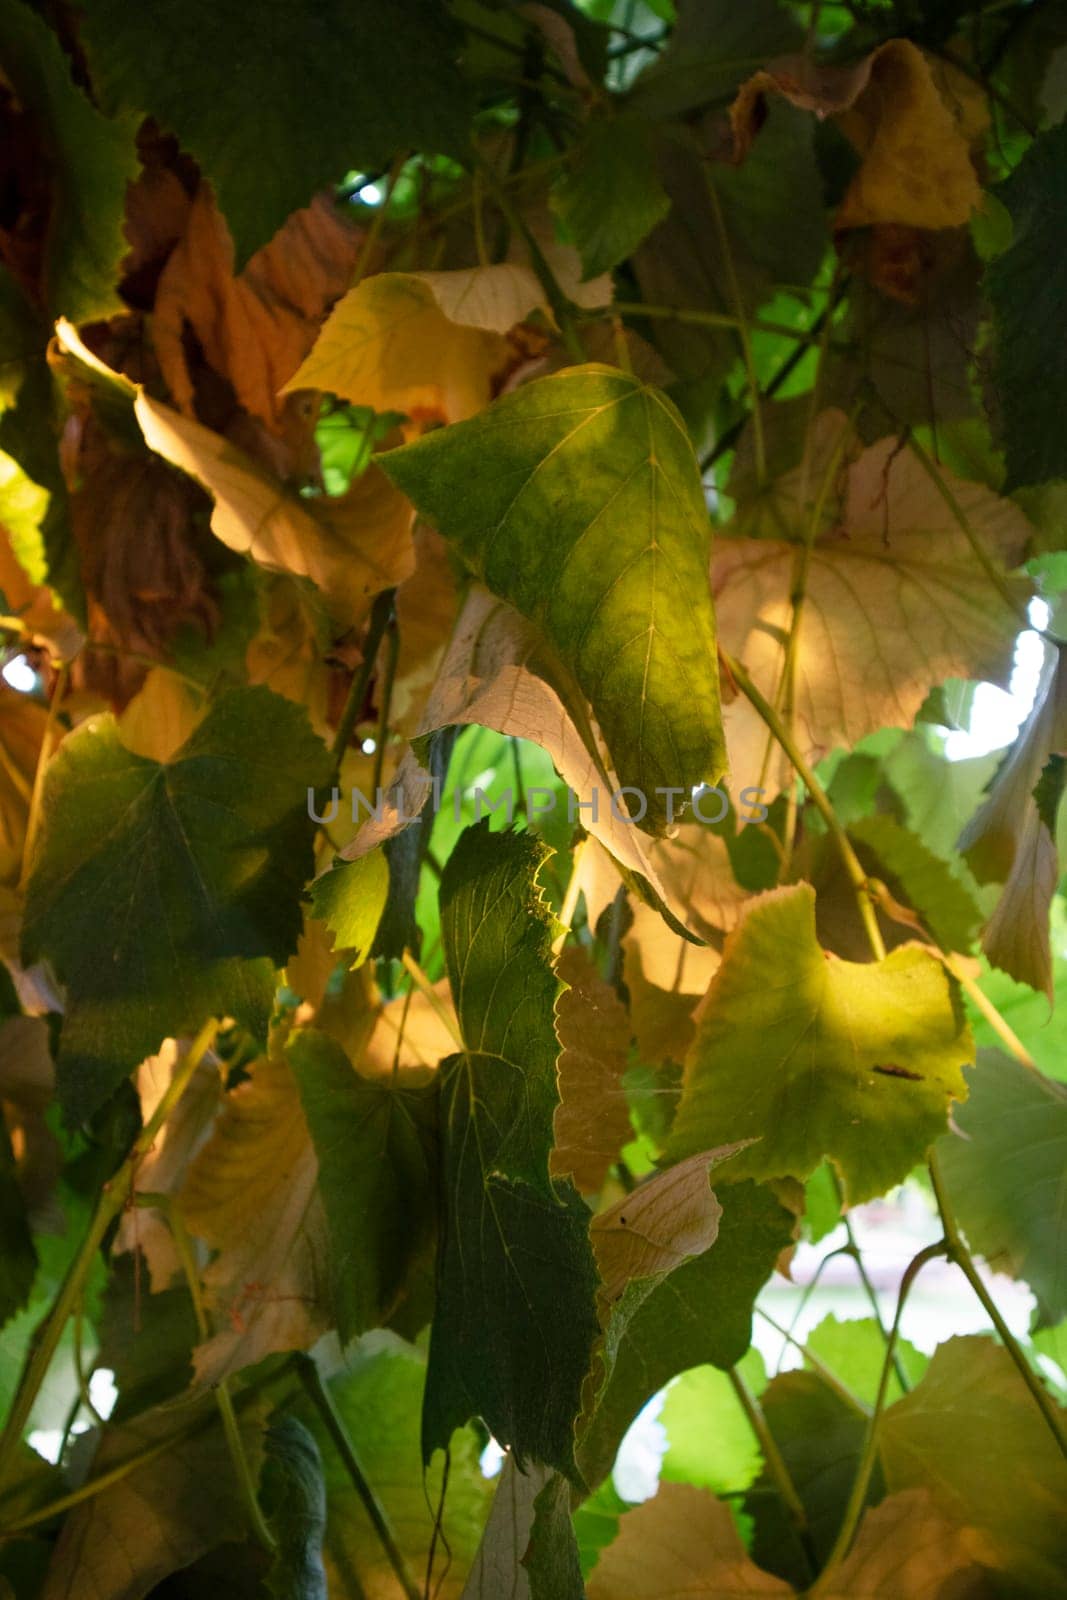 Photographic presentation of the vine leaf  by fotografiche.eu